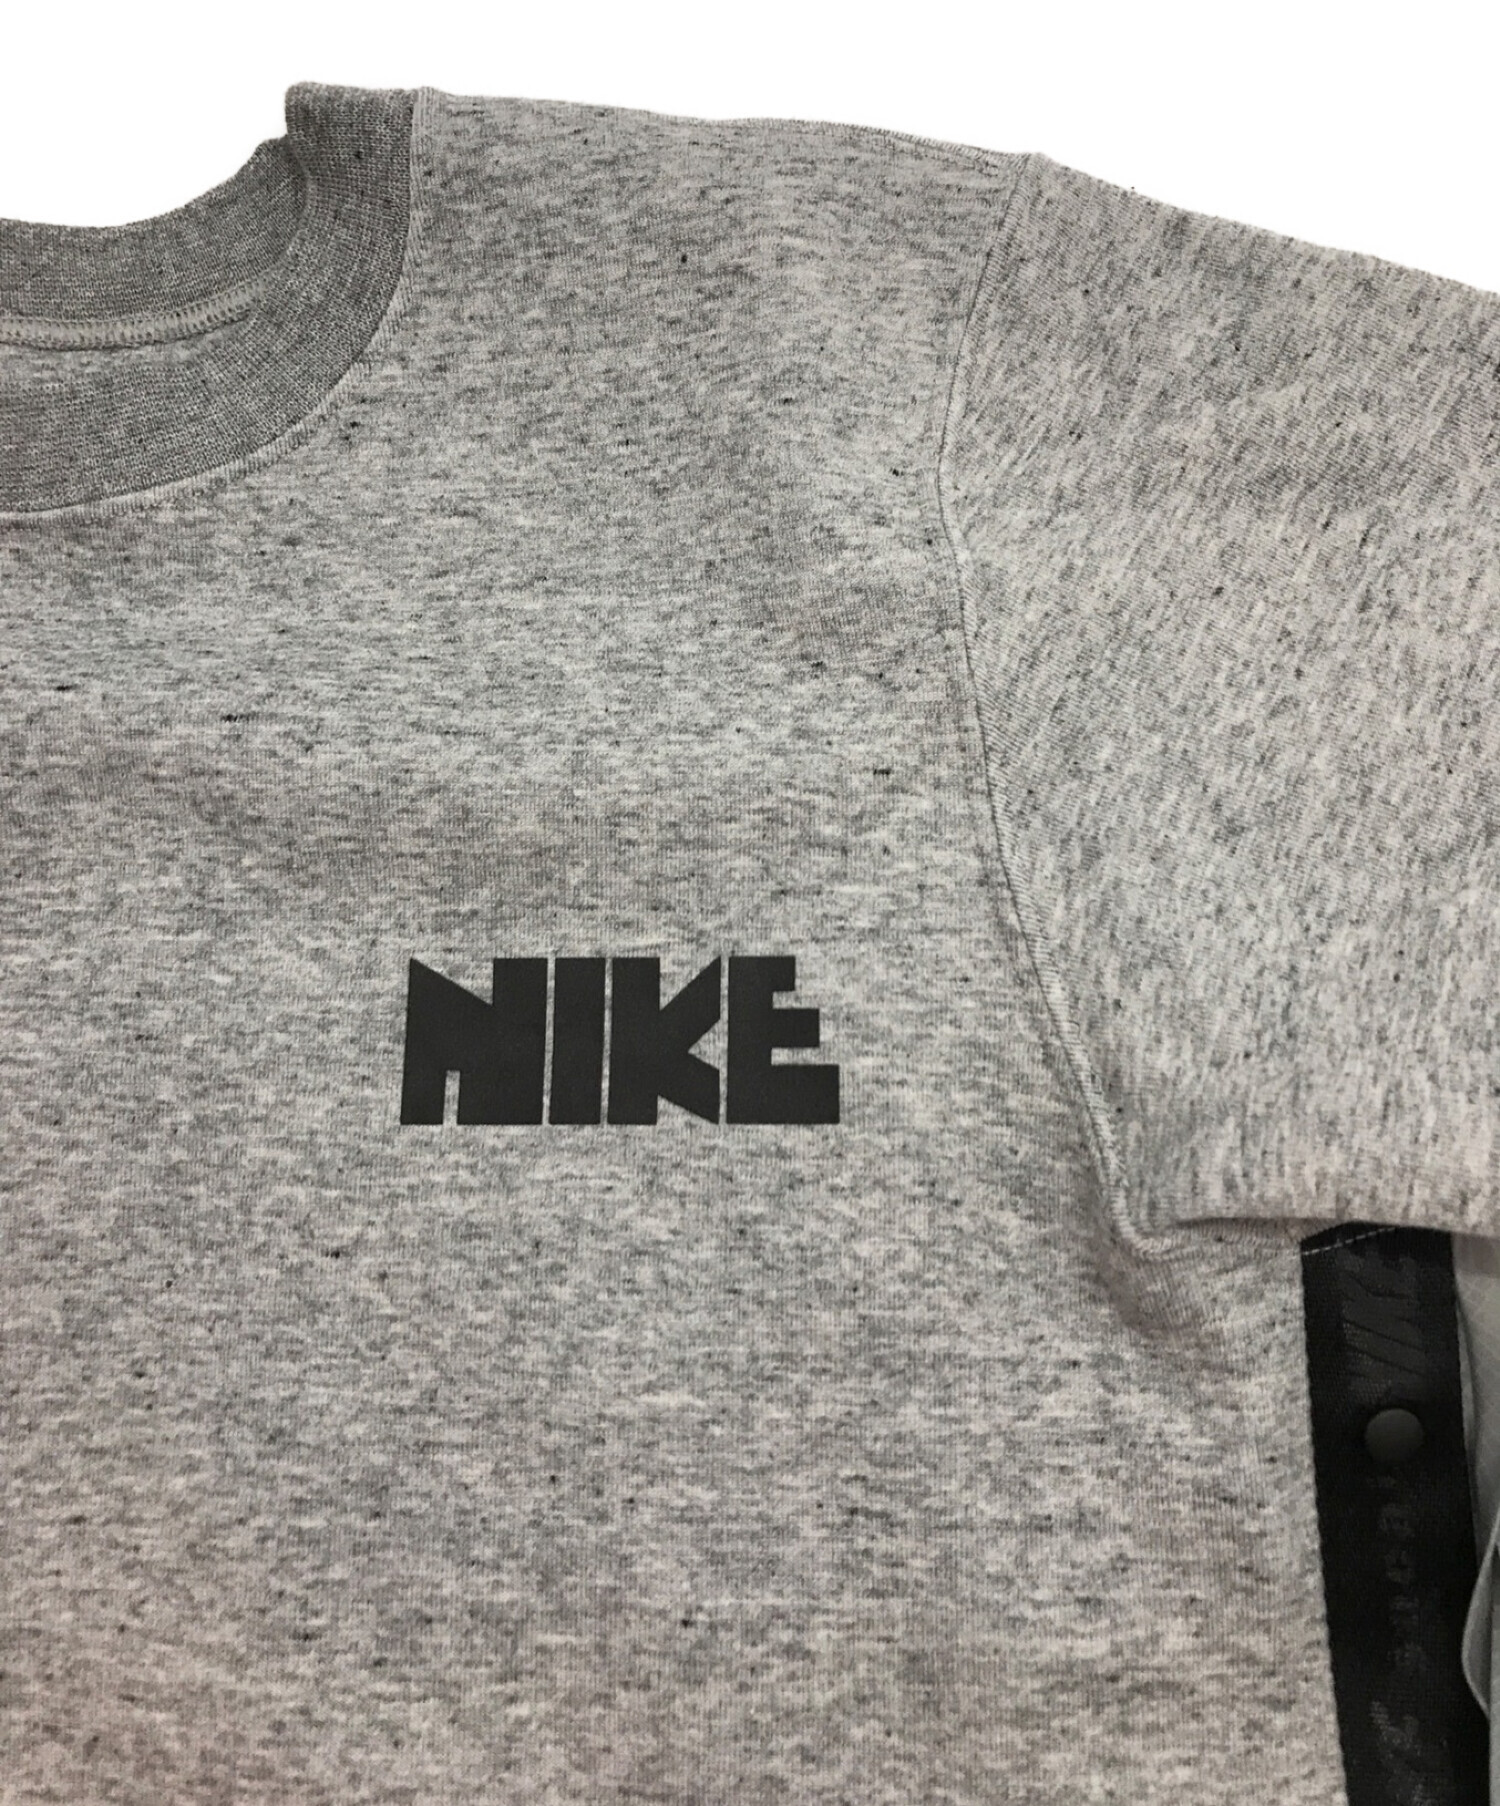 NIKE (ナイキ) sacai (サカイ) バックプリーツTシャツ グレー サイズ:L